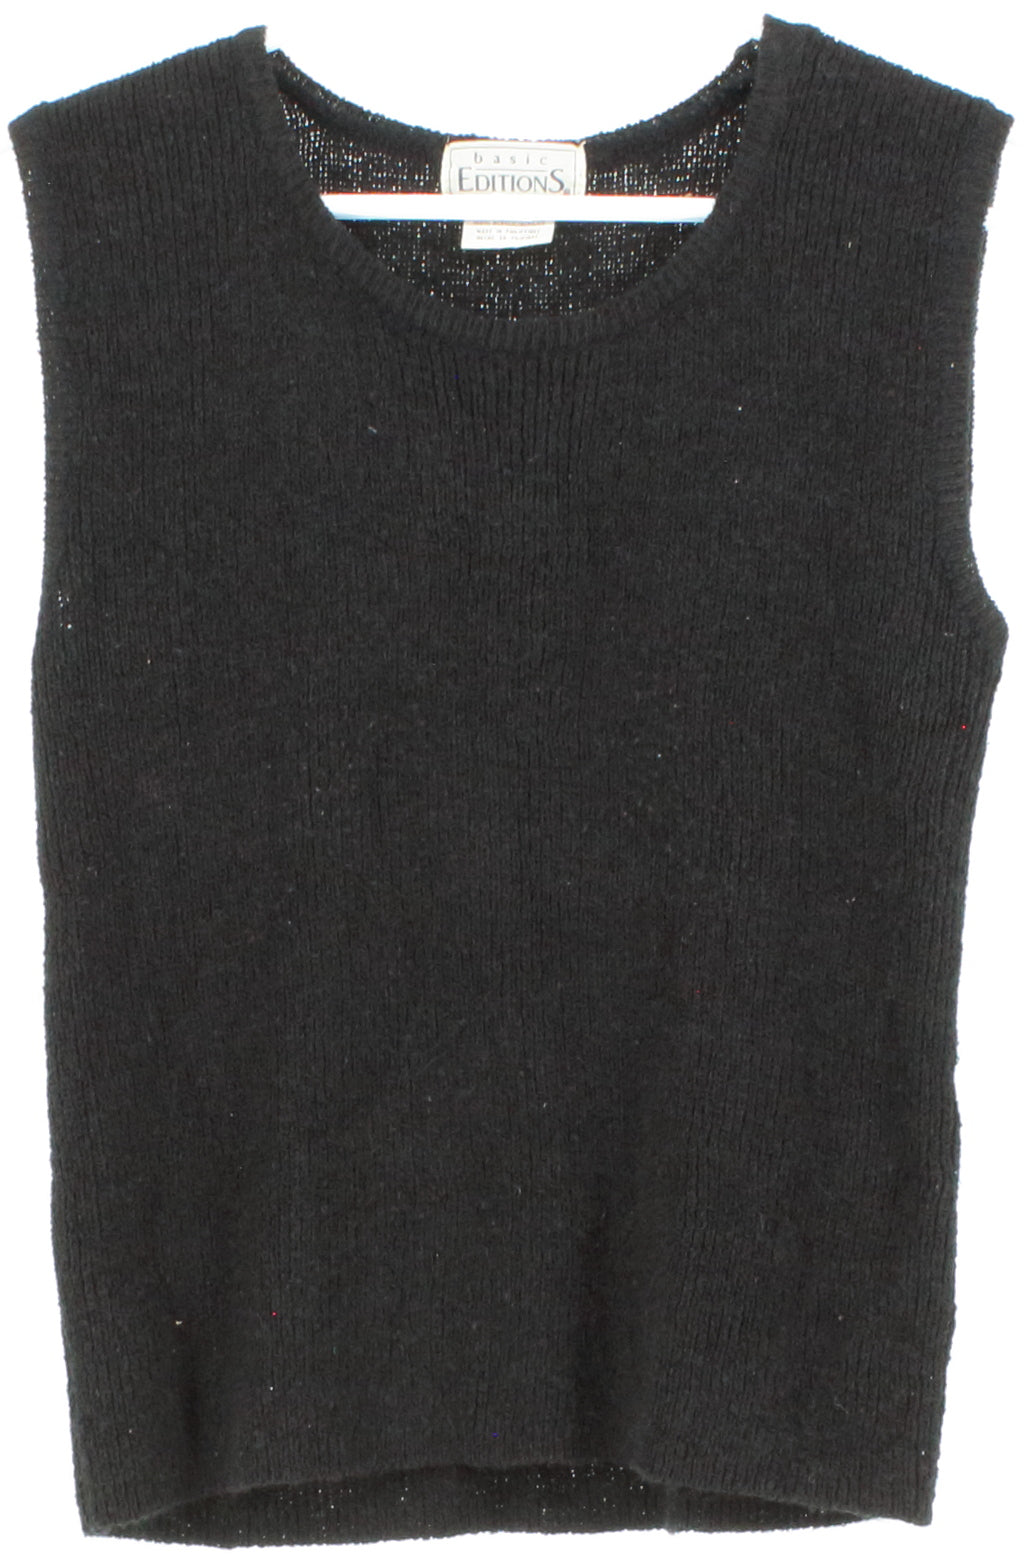 Basic Editions Black Sleeveless Women's Sweater